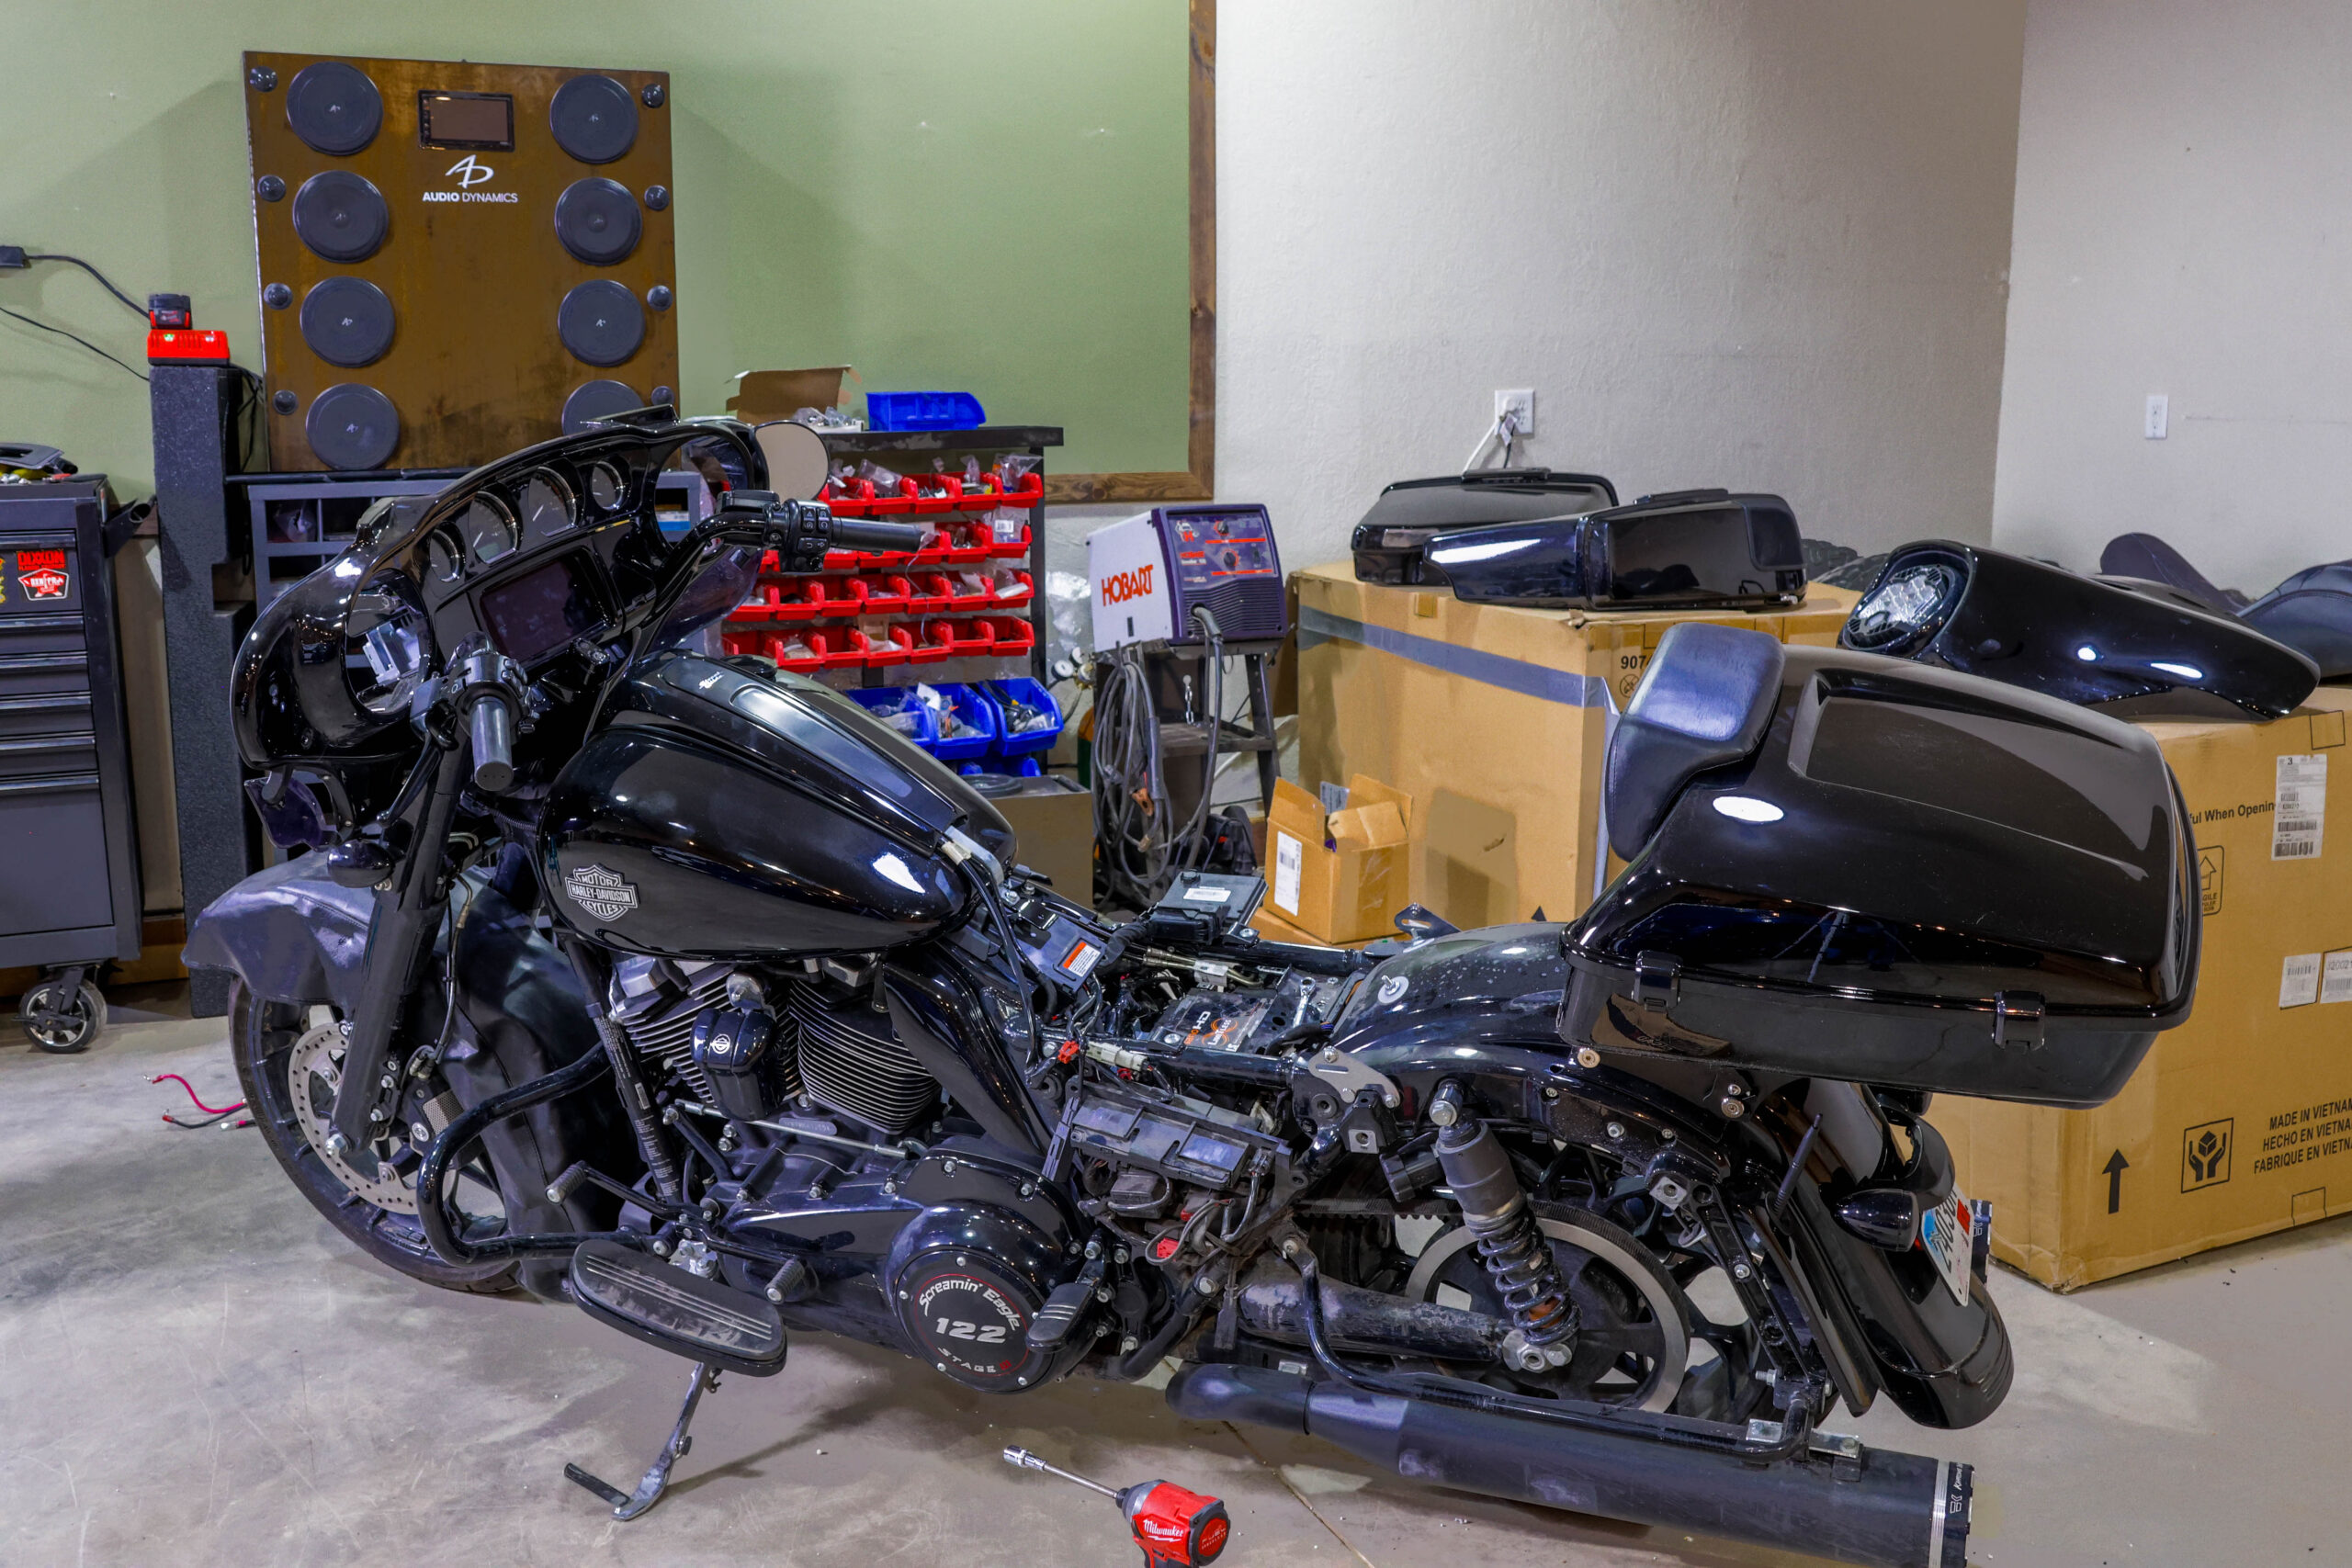 Harley-Davidson Motorcycle before audio installation.